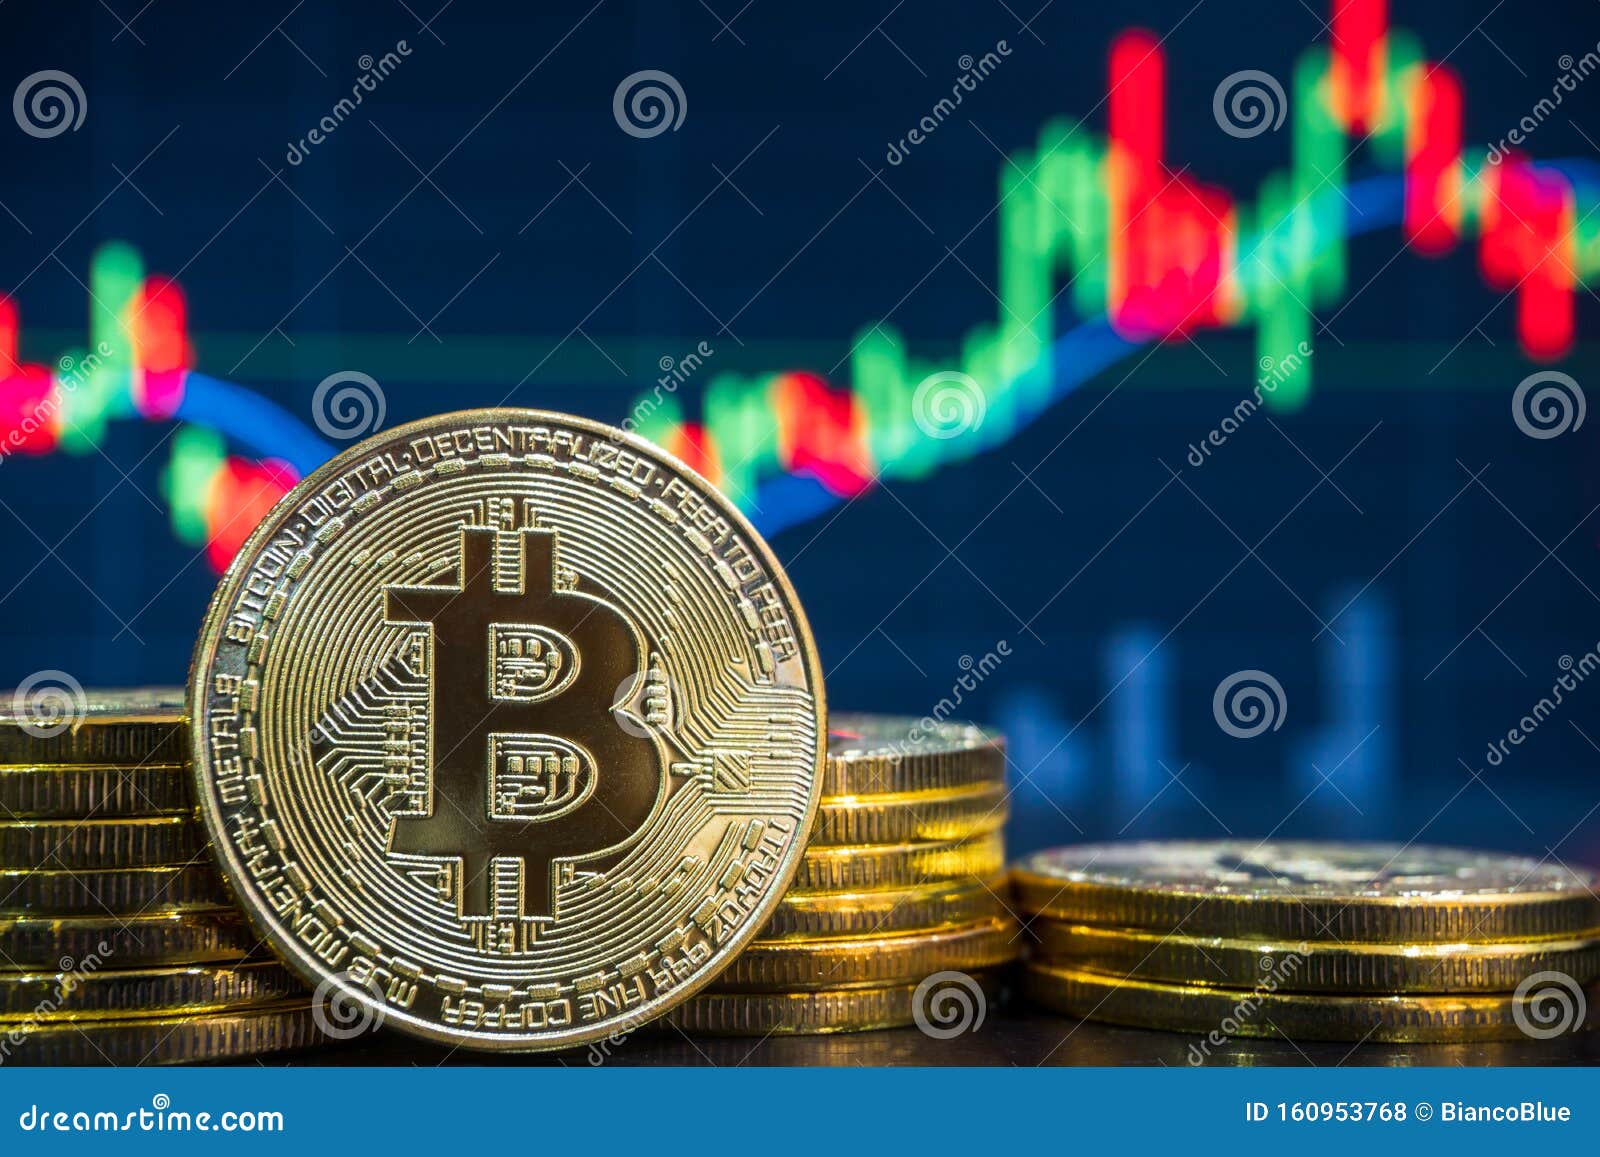 bitcoin cross exchange trading